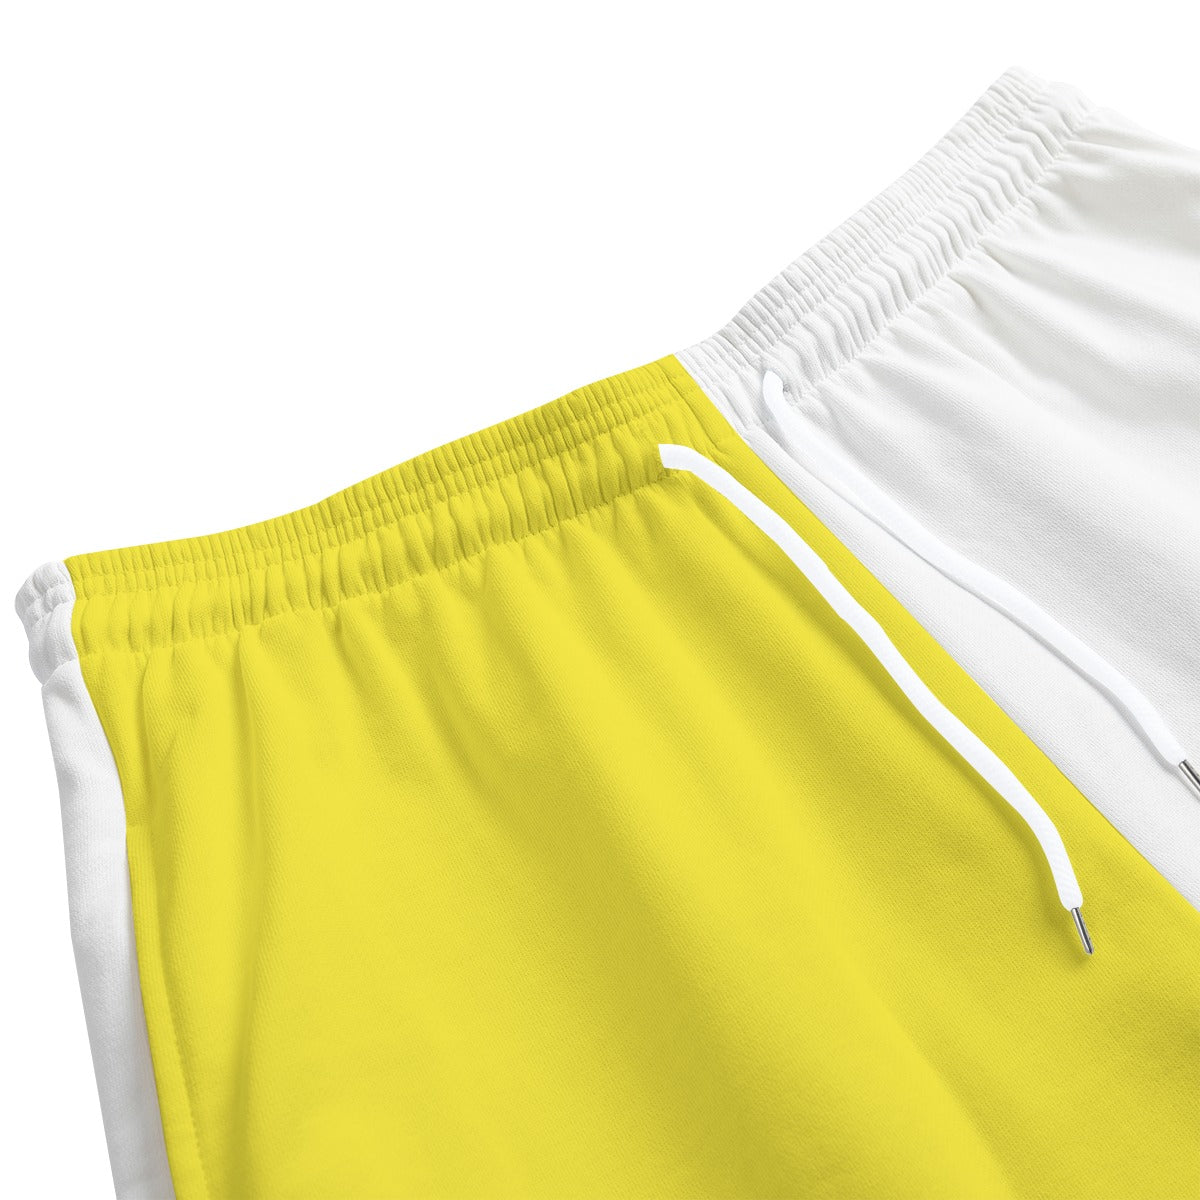 - AM&IS Yellow Color Block Men's Shorts | 100% Cotton - mens shorts at TFC&H Co.